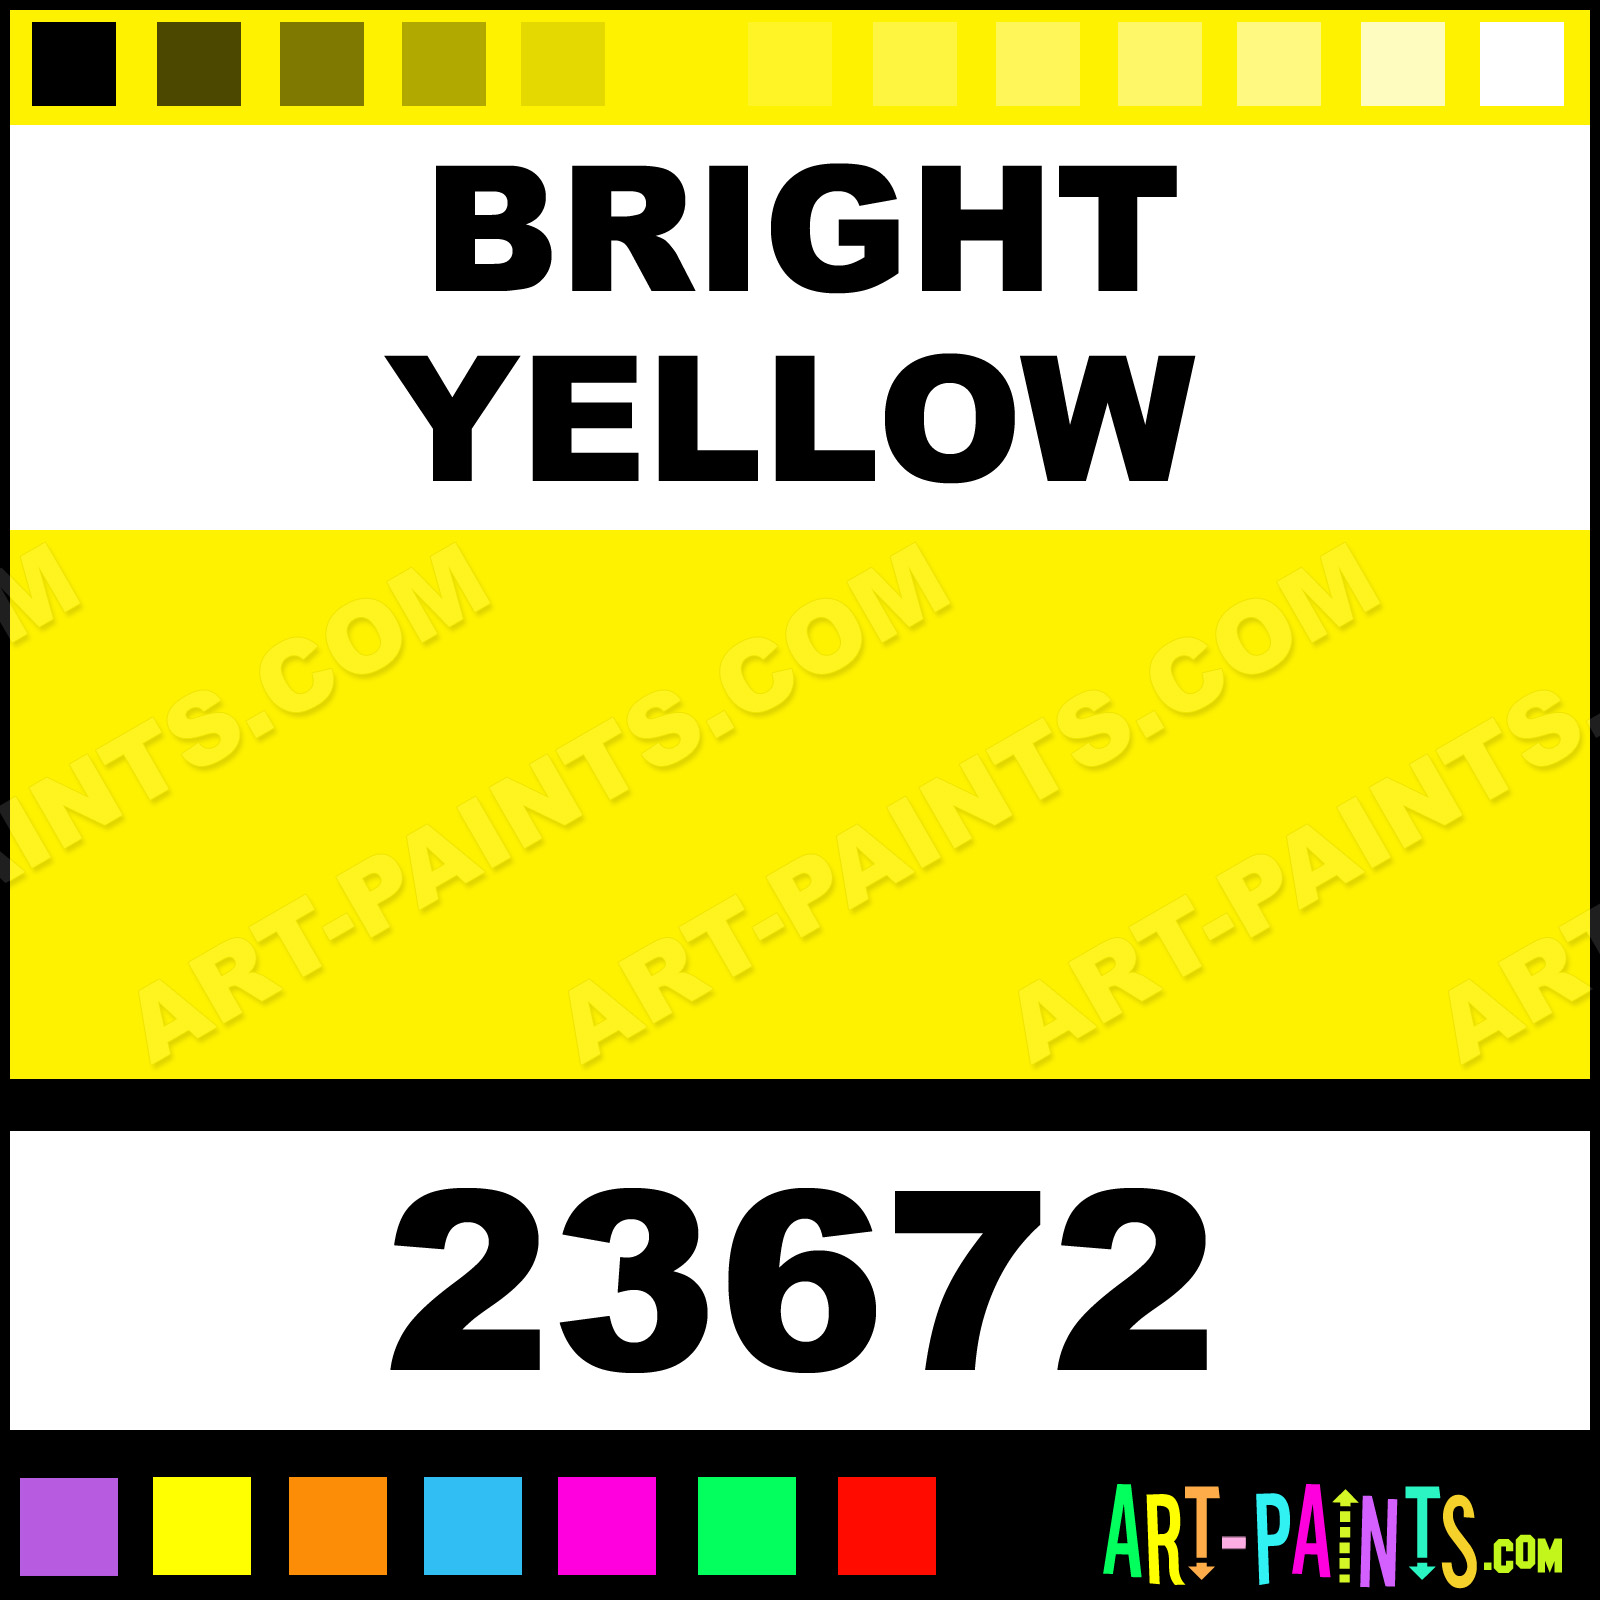 Bright Yellow Artist Acrylic Paints - 23672 - Bright Yellow Paint